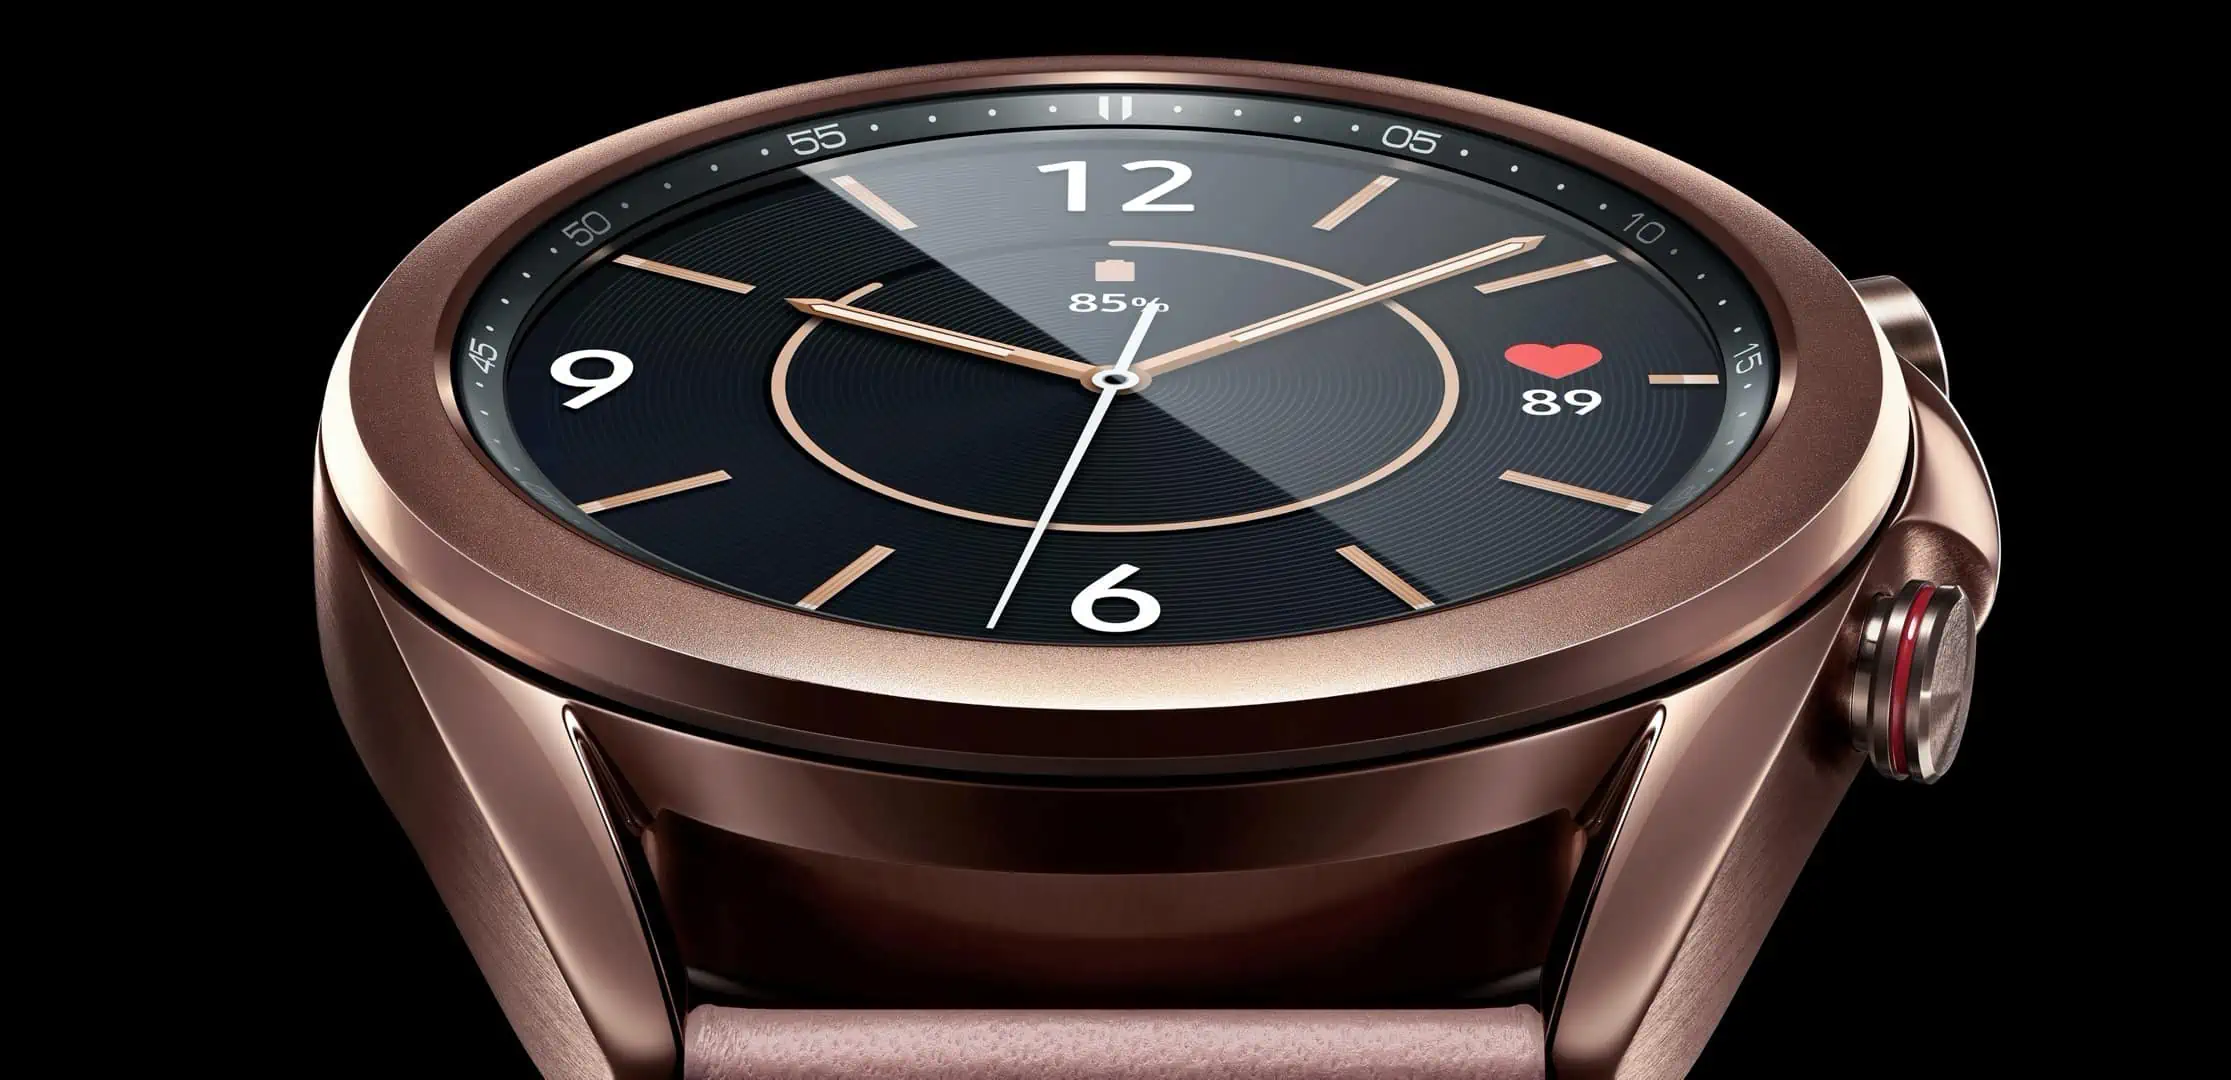 Latest Samsung Galaxy Watch 3 leak reveals one more new